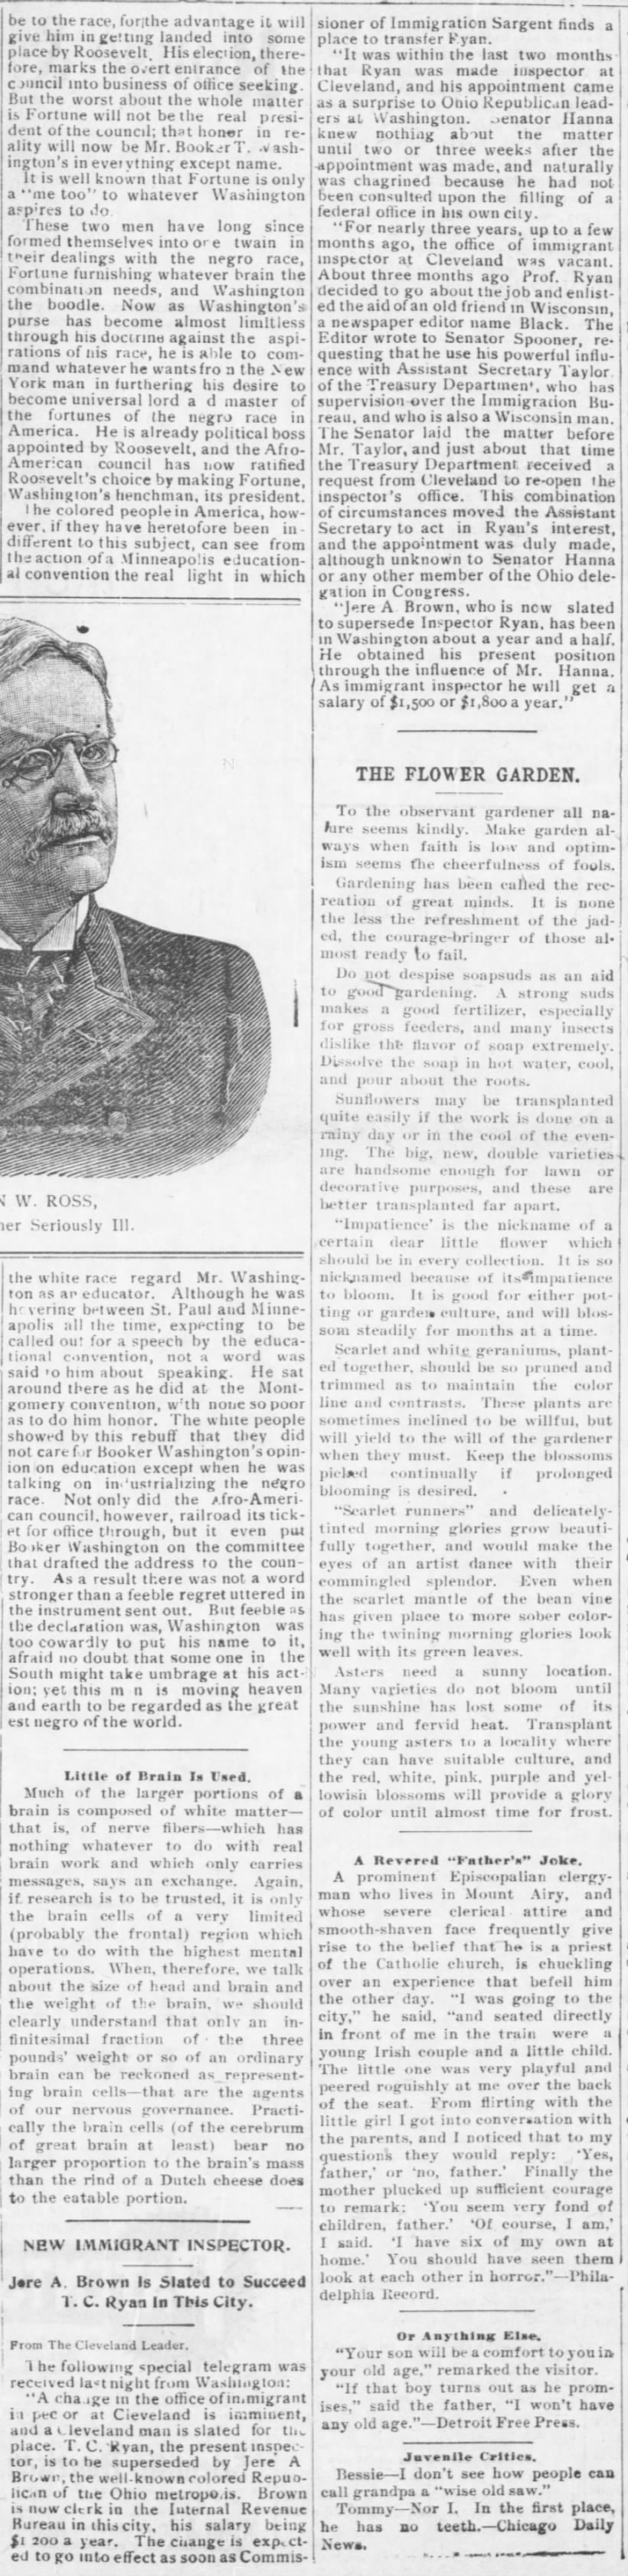 New Immigrant Inspector, The Washington Bee (Washington, DC), July 26, 1902, page 1